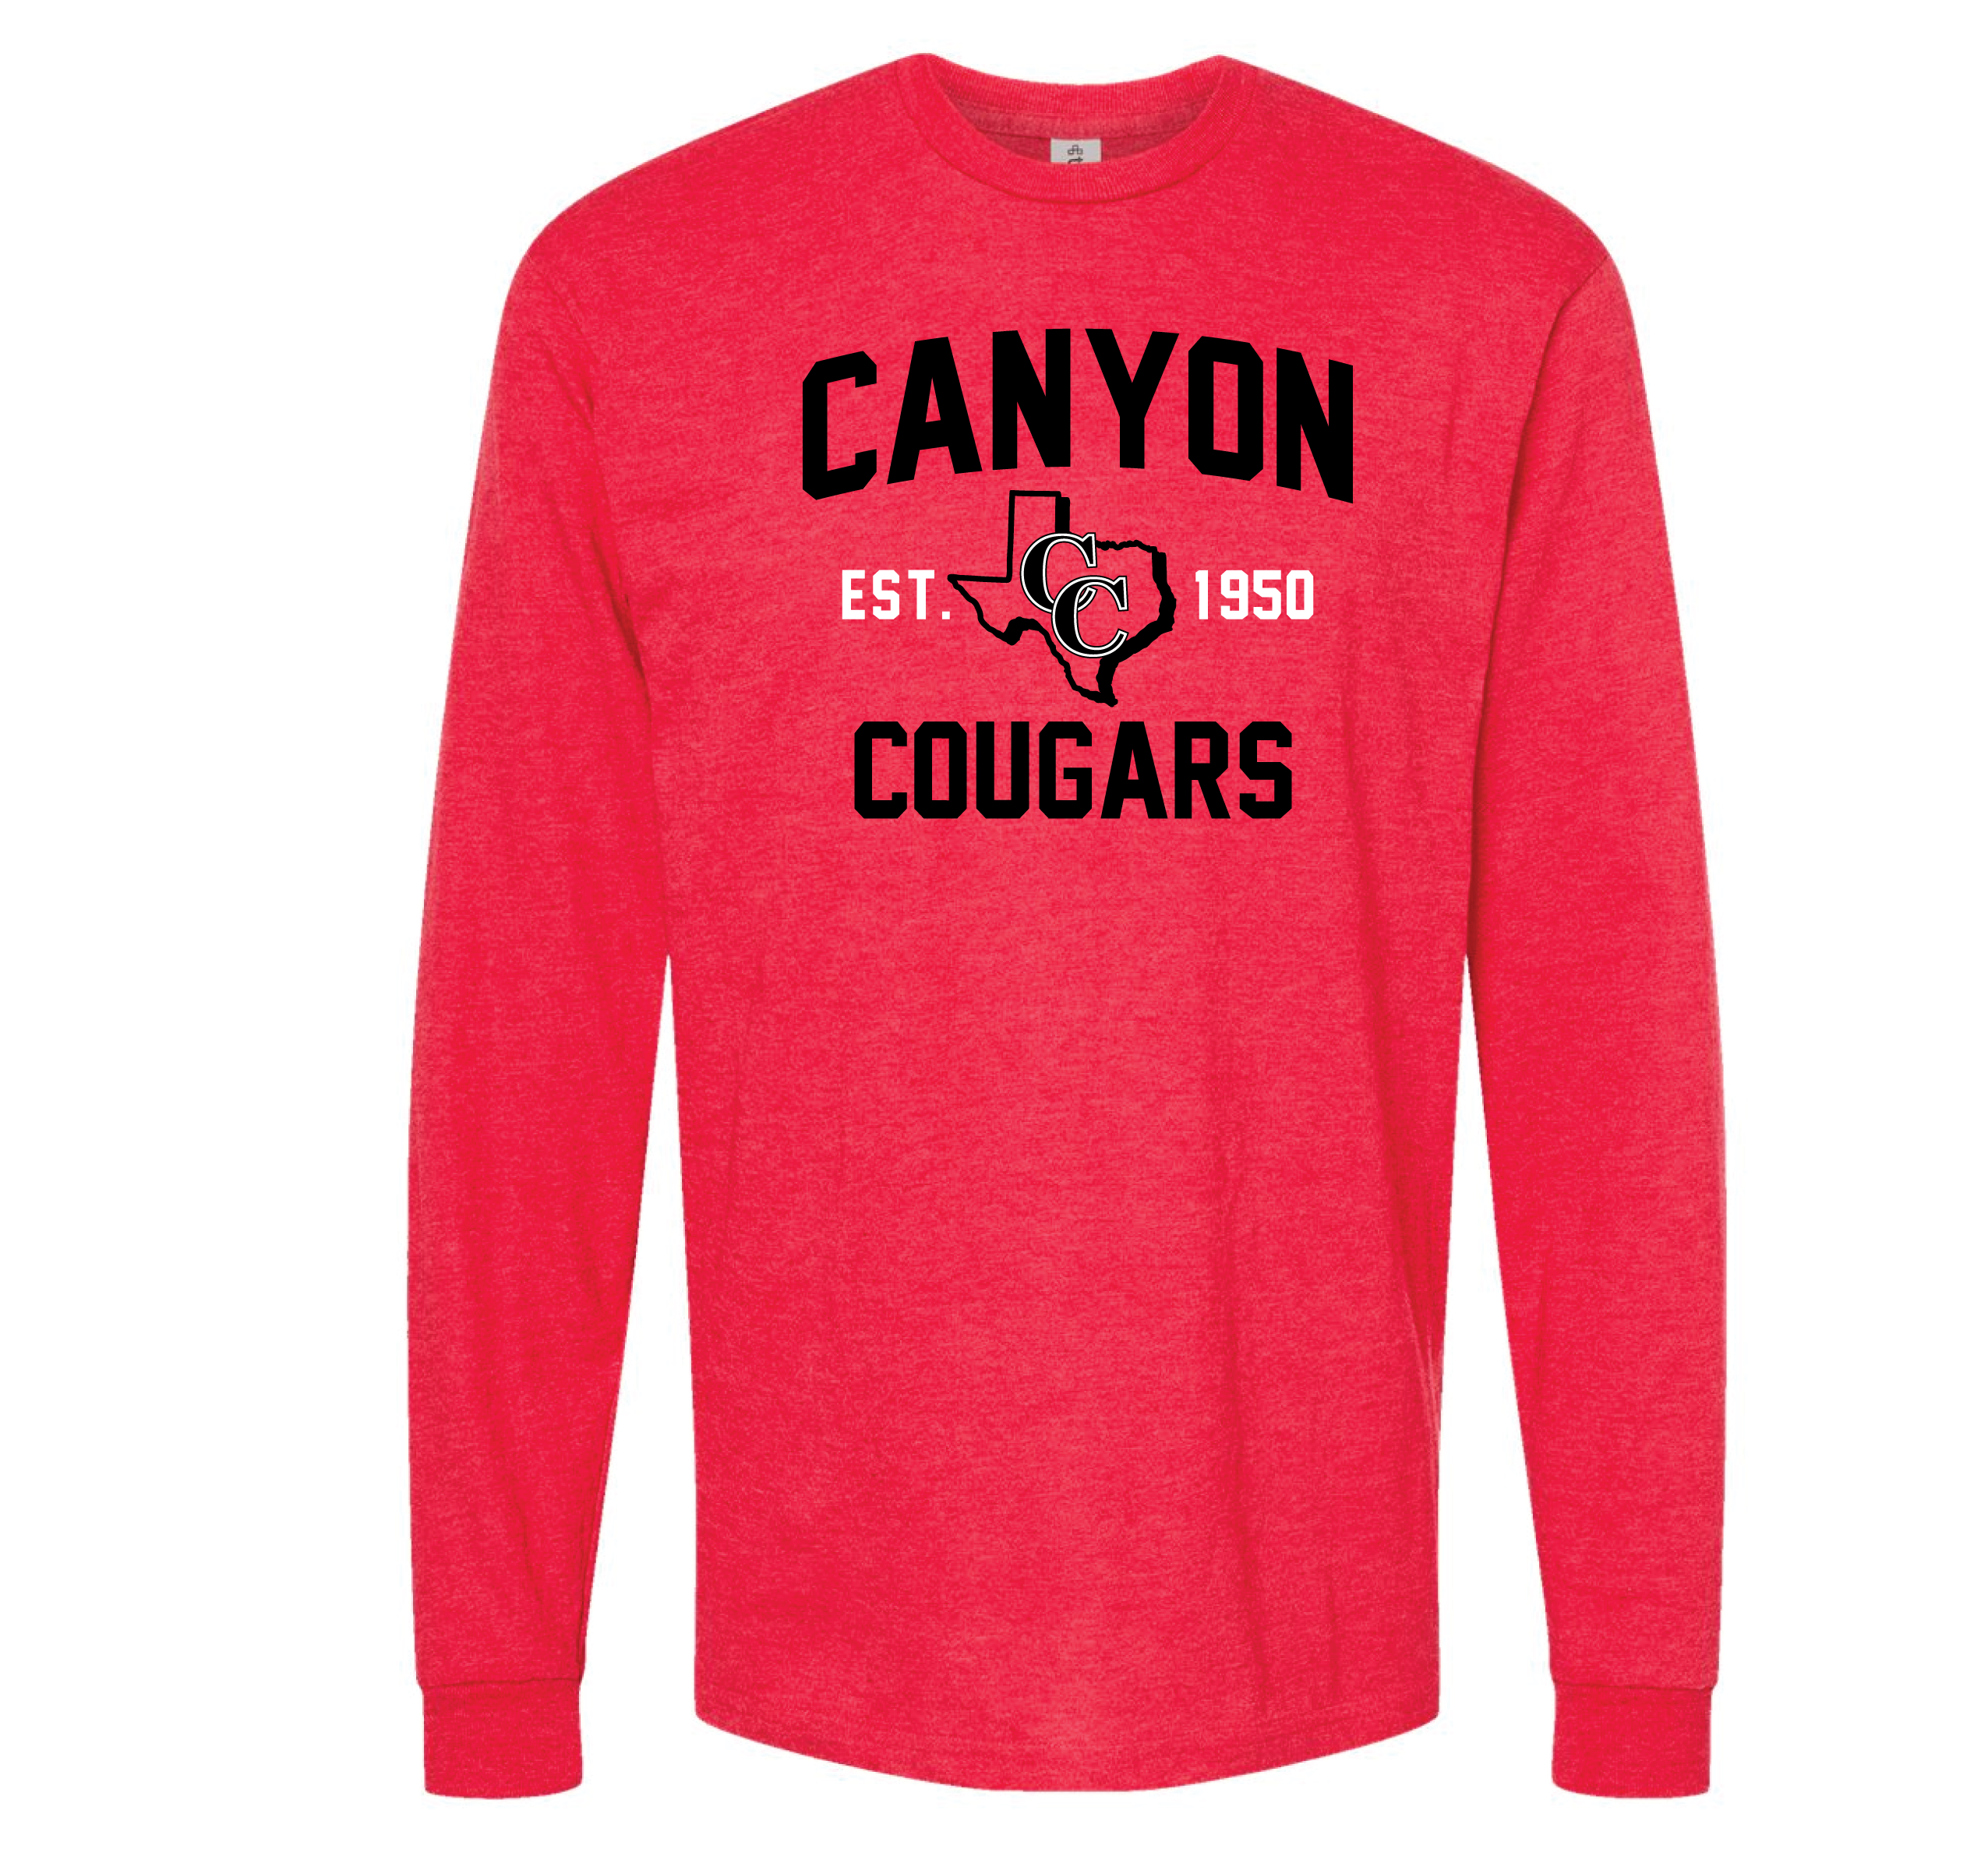 Canyon Cougars Long Sleeve